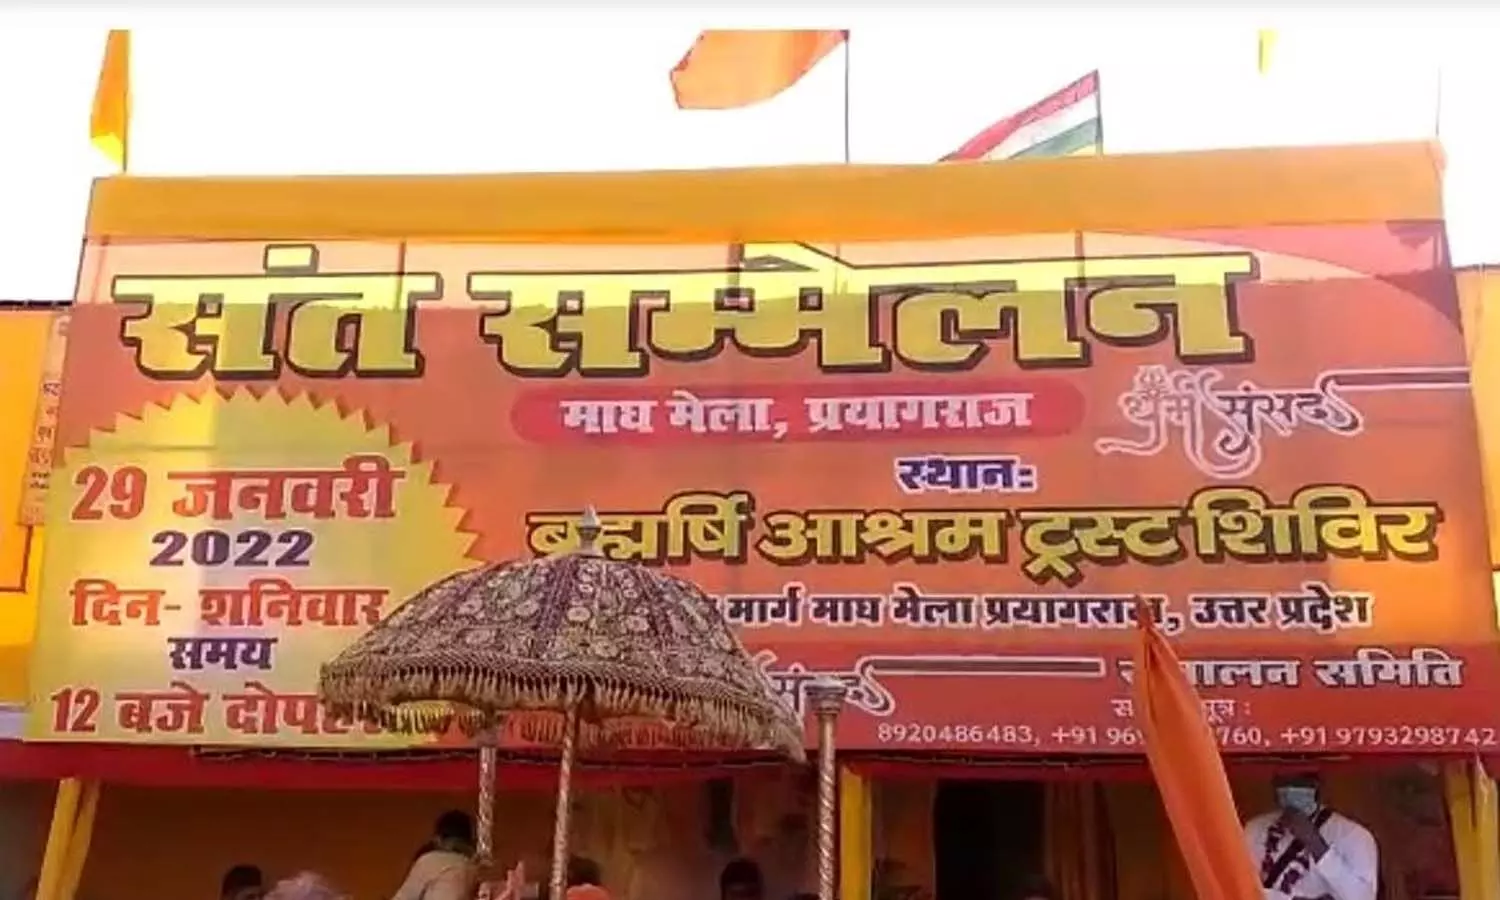 Magh Mela 2022: Sant Sammelan organized in Magh Mela, demand raised to make India a Hindu nation